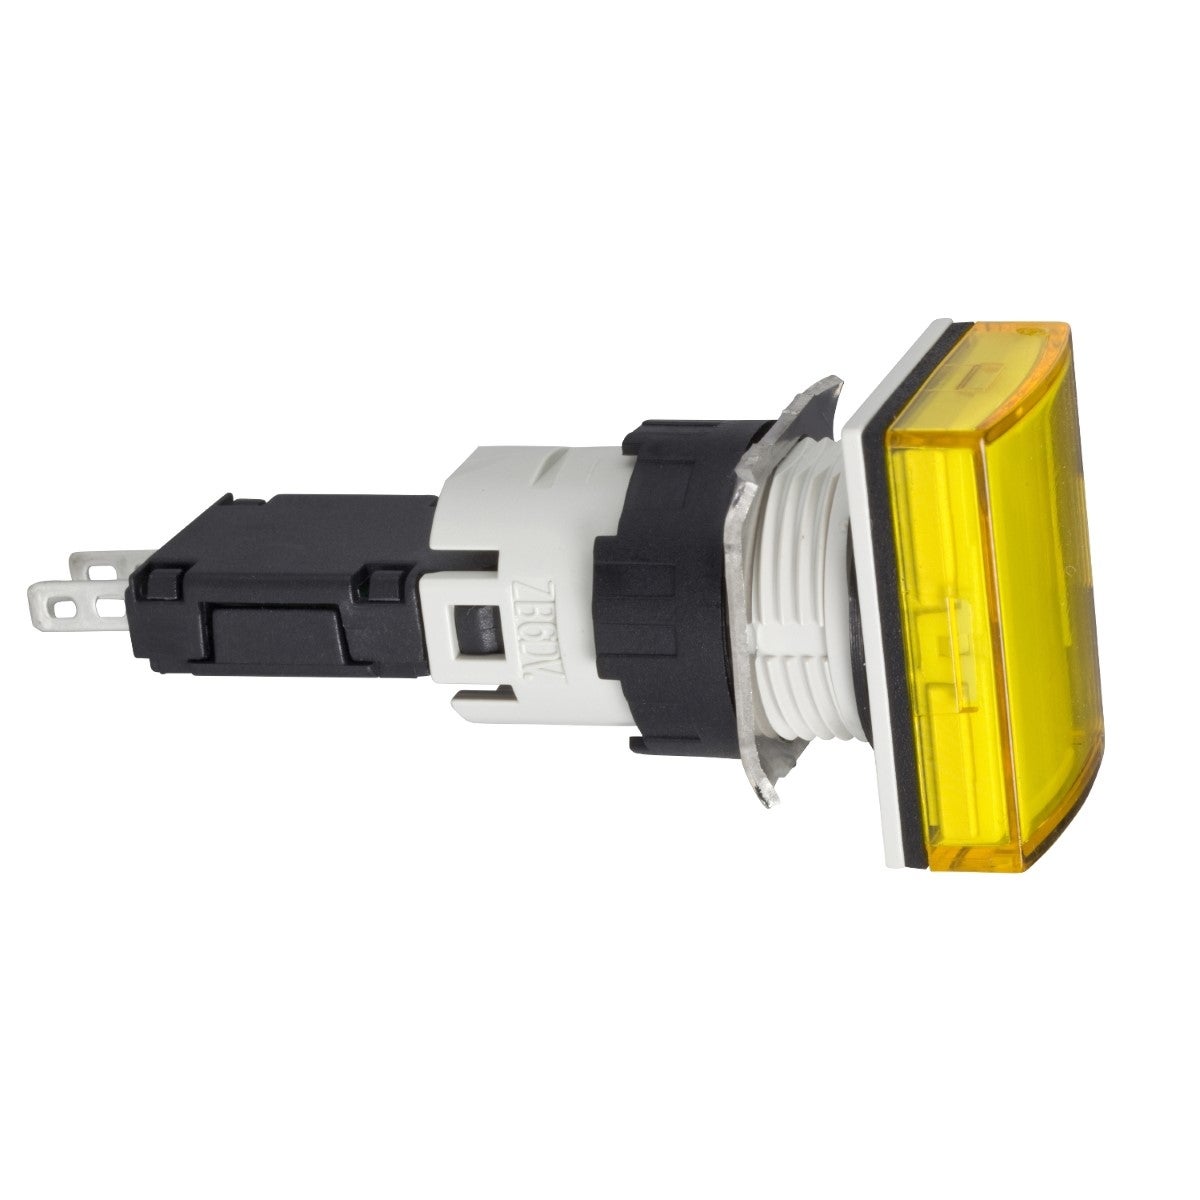 Complete pilot light, Harmony XB6, rectangular yellow, plastic, 16mm, integral LED, 12...24V